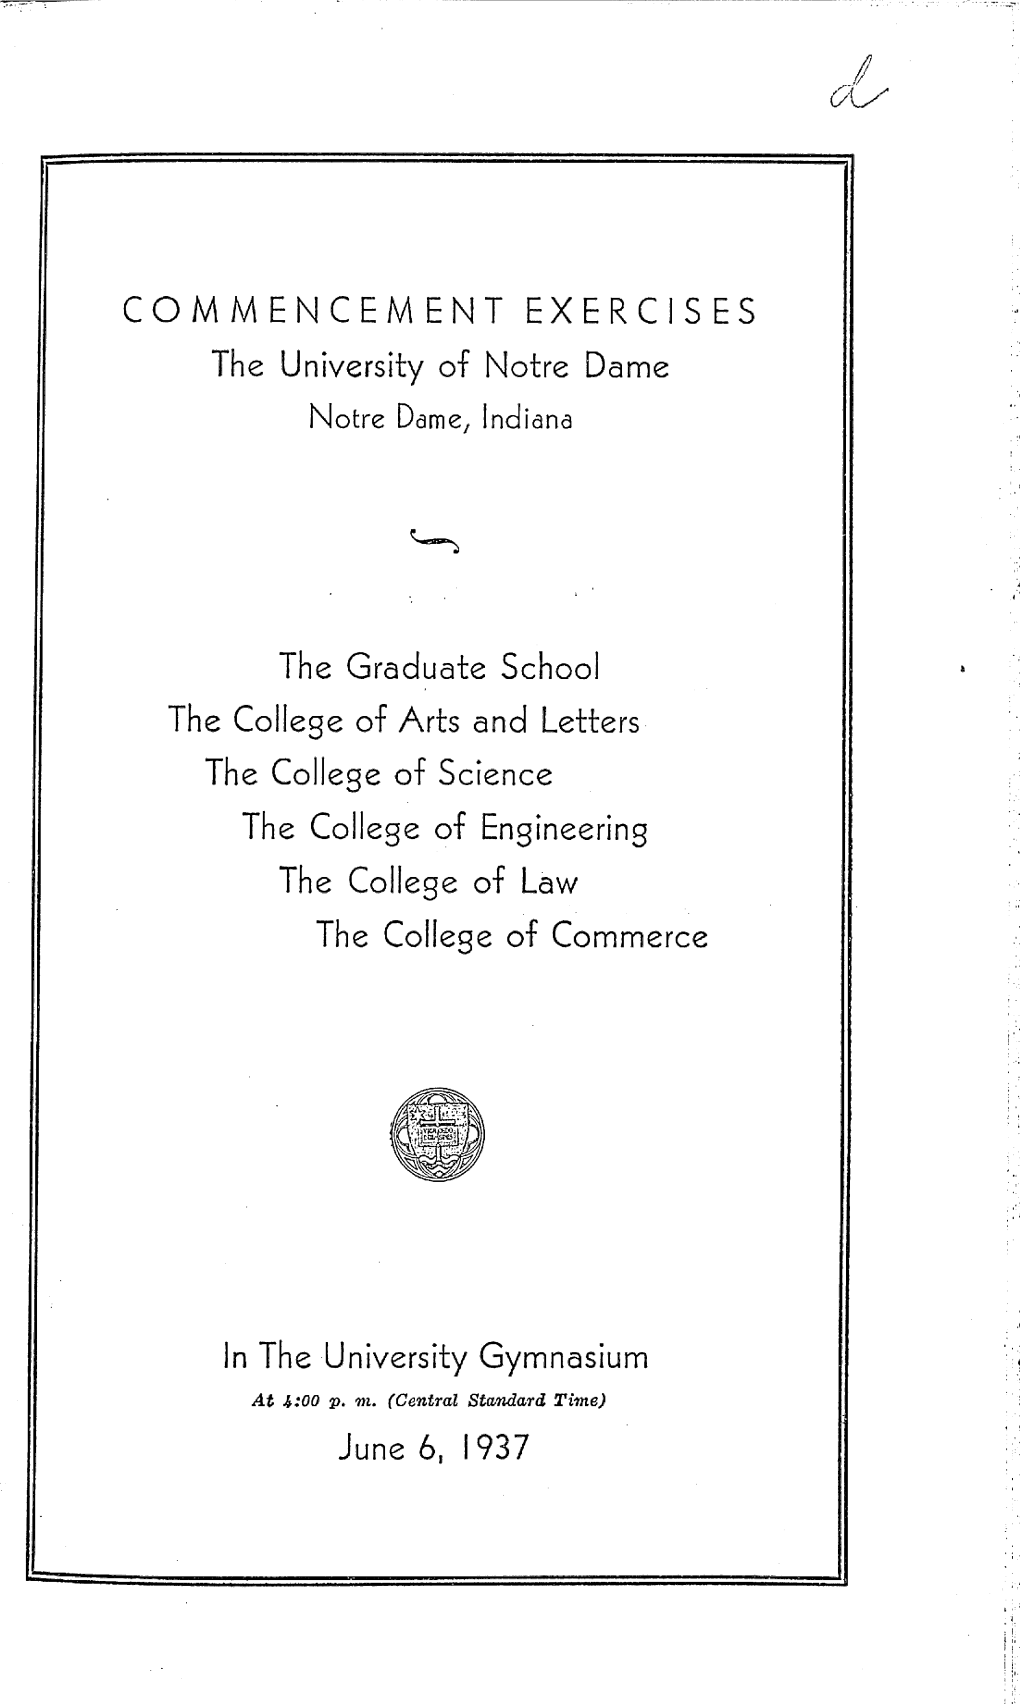 1937-06-06 University of Notre Dame Commencement